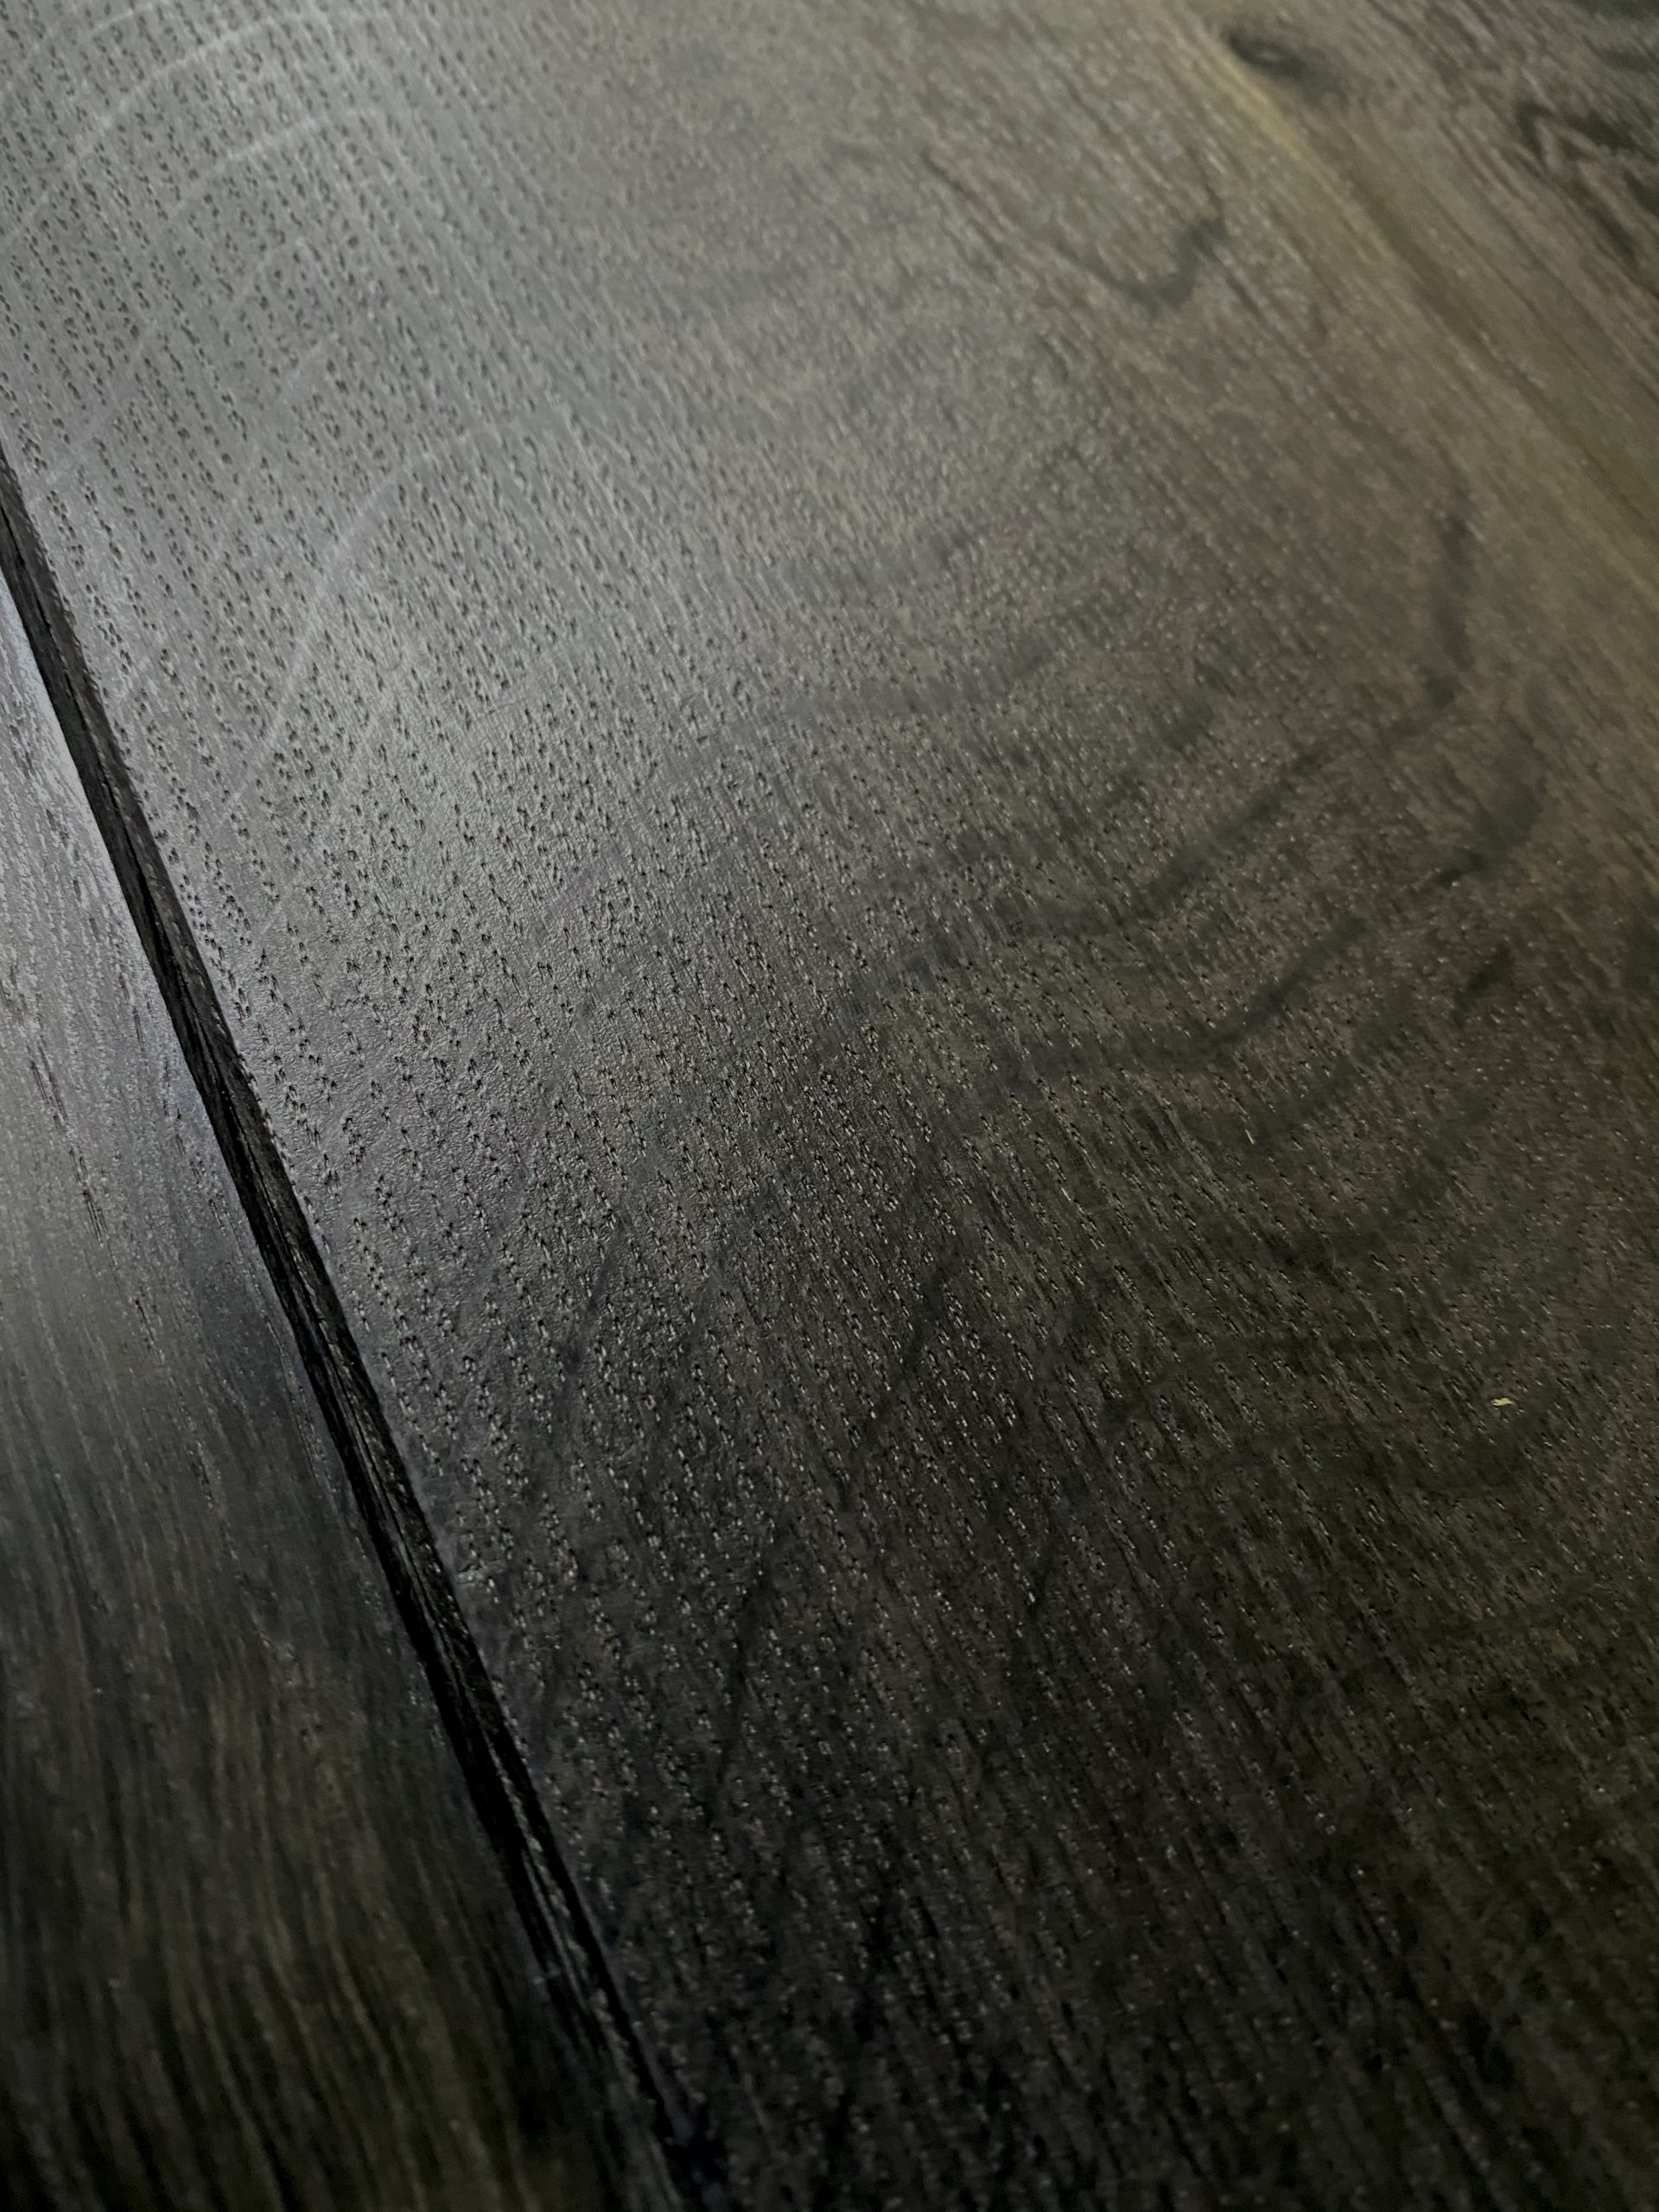 New Wood Flooring